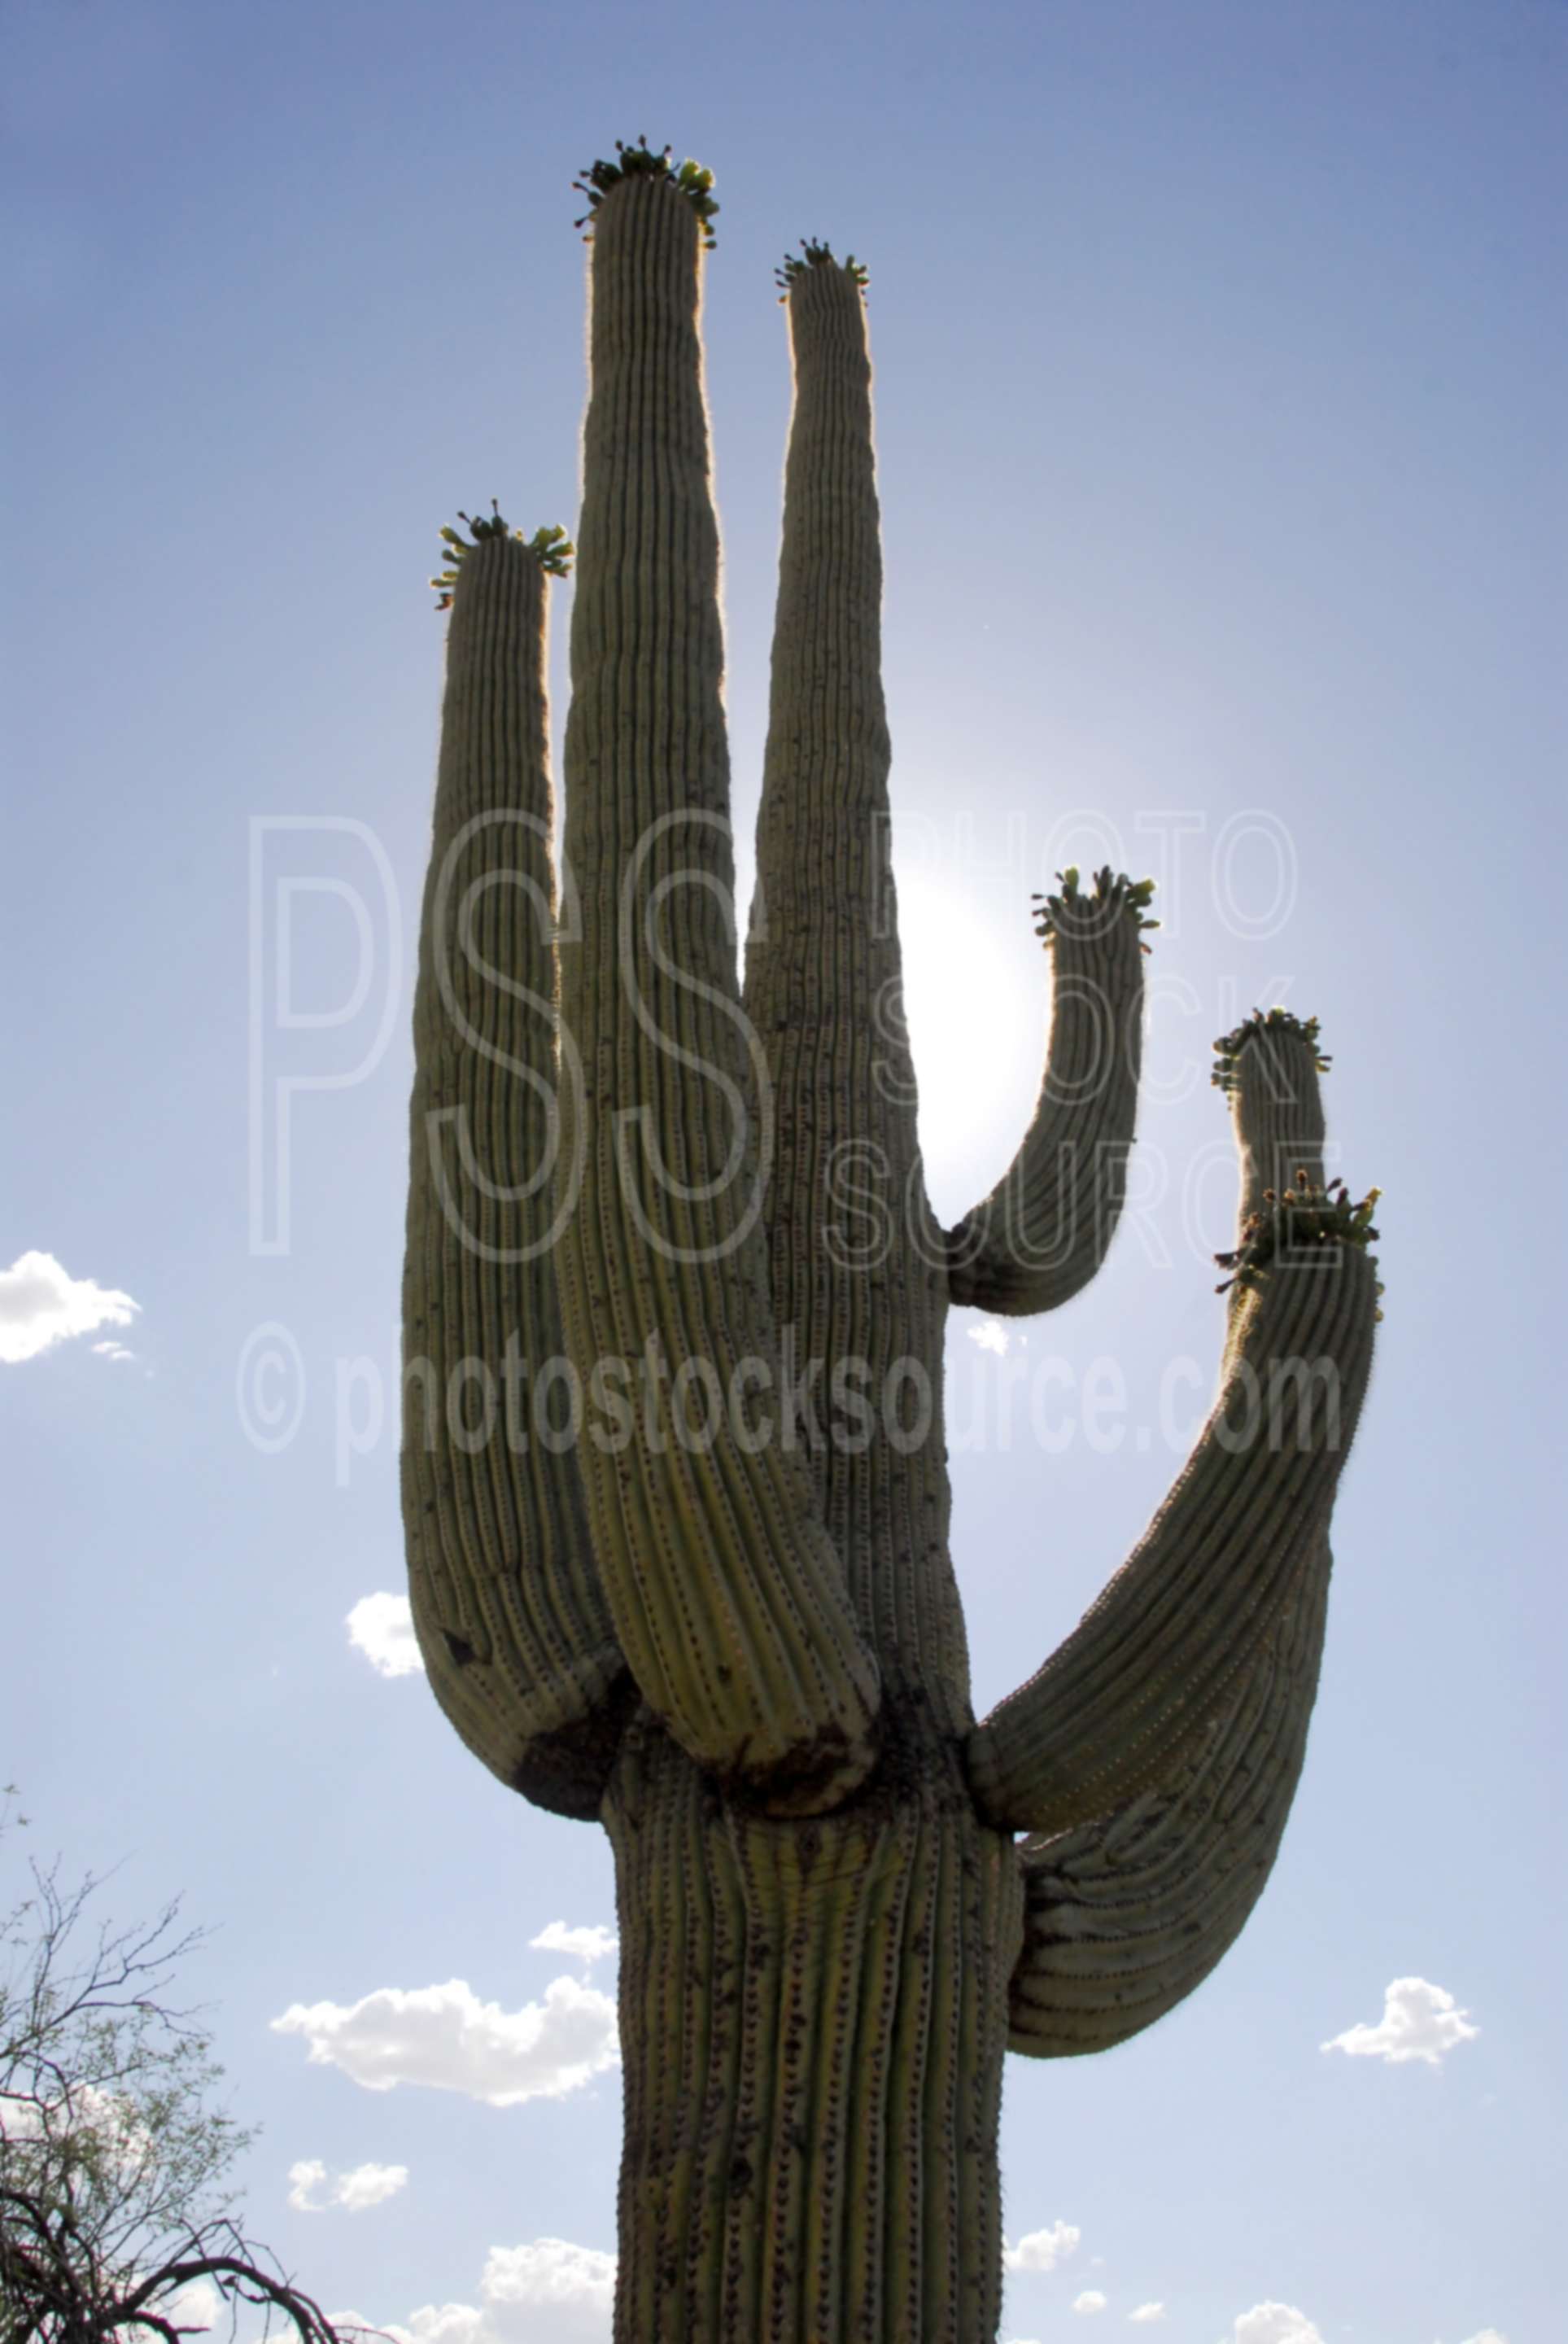 Saguaro Cactus,cactus,national park,cacti,clouds,silhouette,nature,national parks